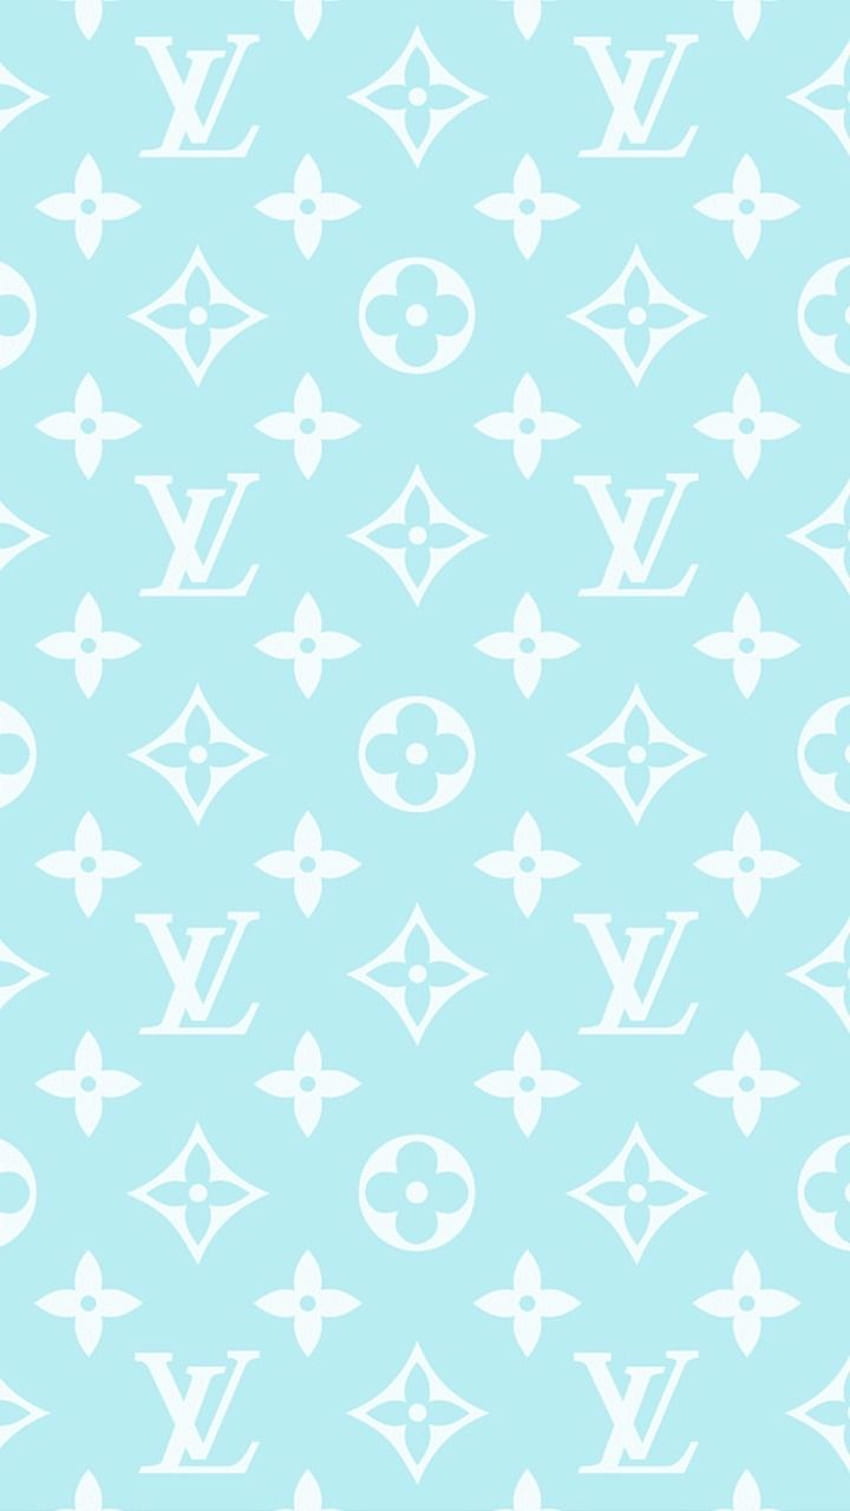 52 Louis vution ideas  louis vuitton iphone wallpaper, aesthetic iphone  wallpaper, iphone wallpaper